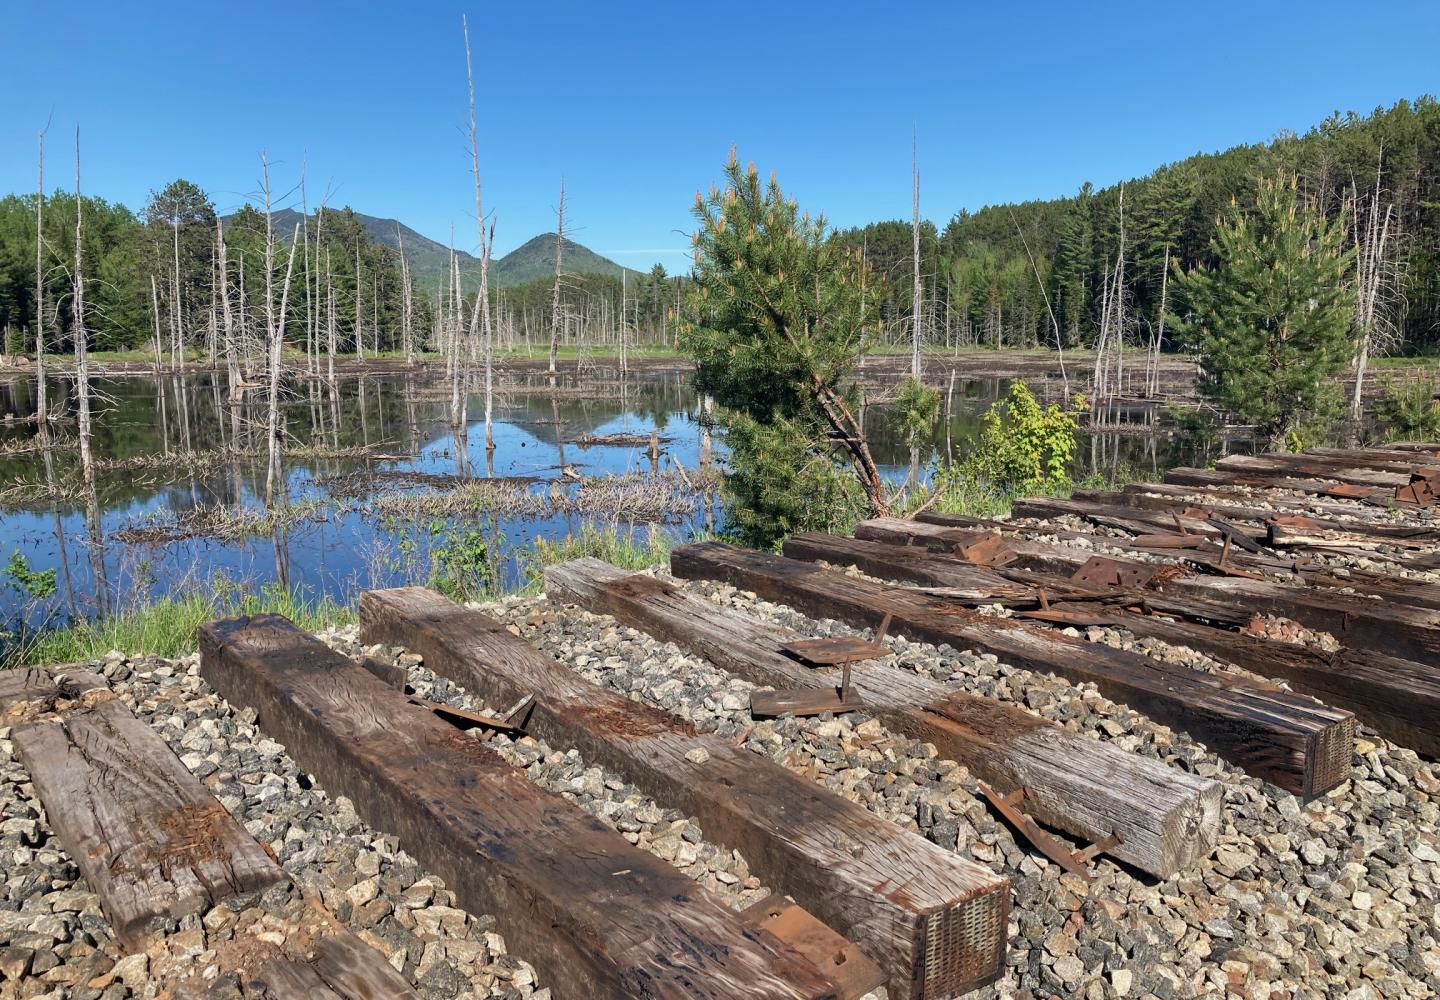 The future 34-mile Adirondack Rail Trail